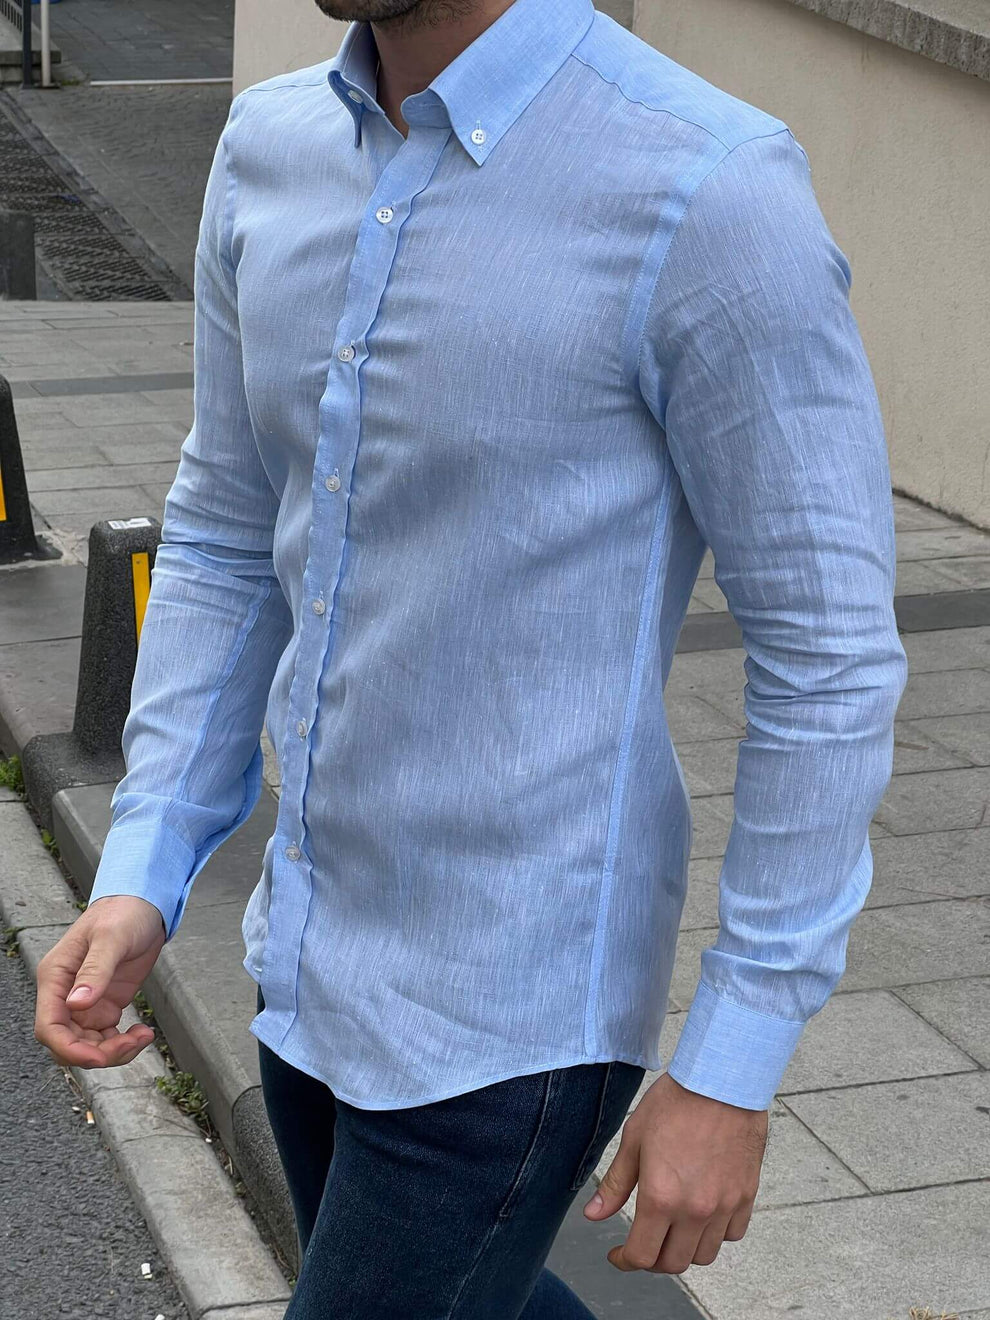 Undeniable Dapper Charm: Men's Blue Linen Shirt | HolloMen